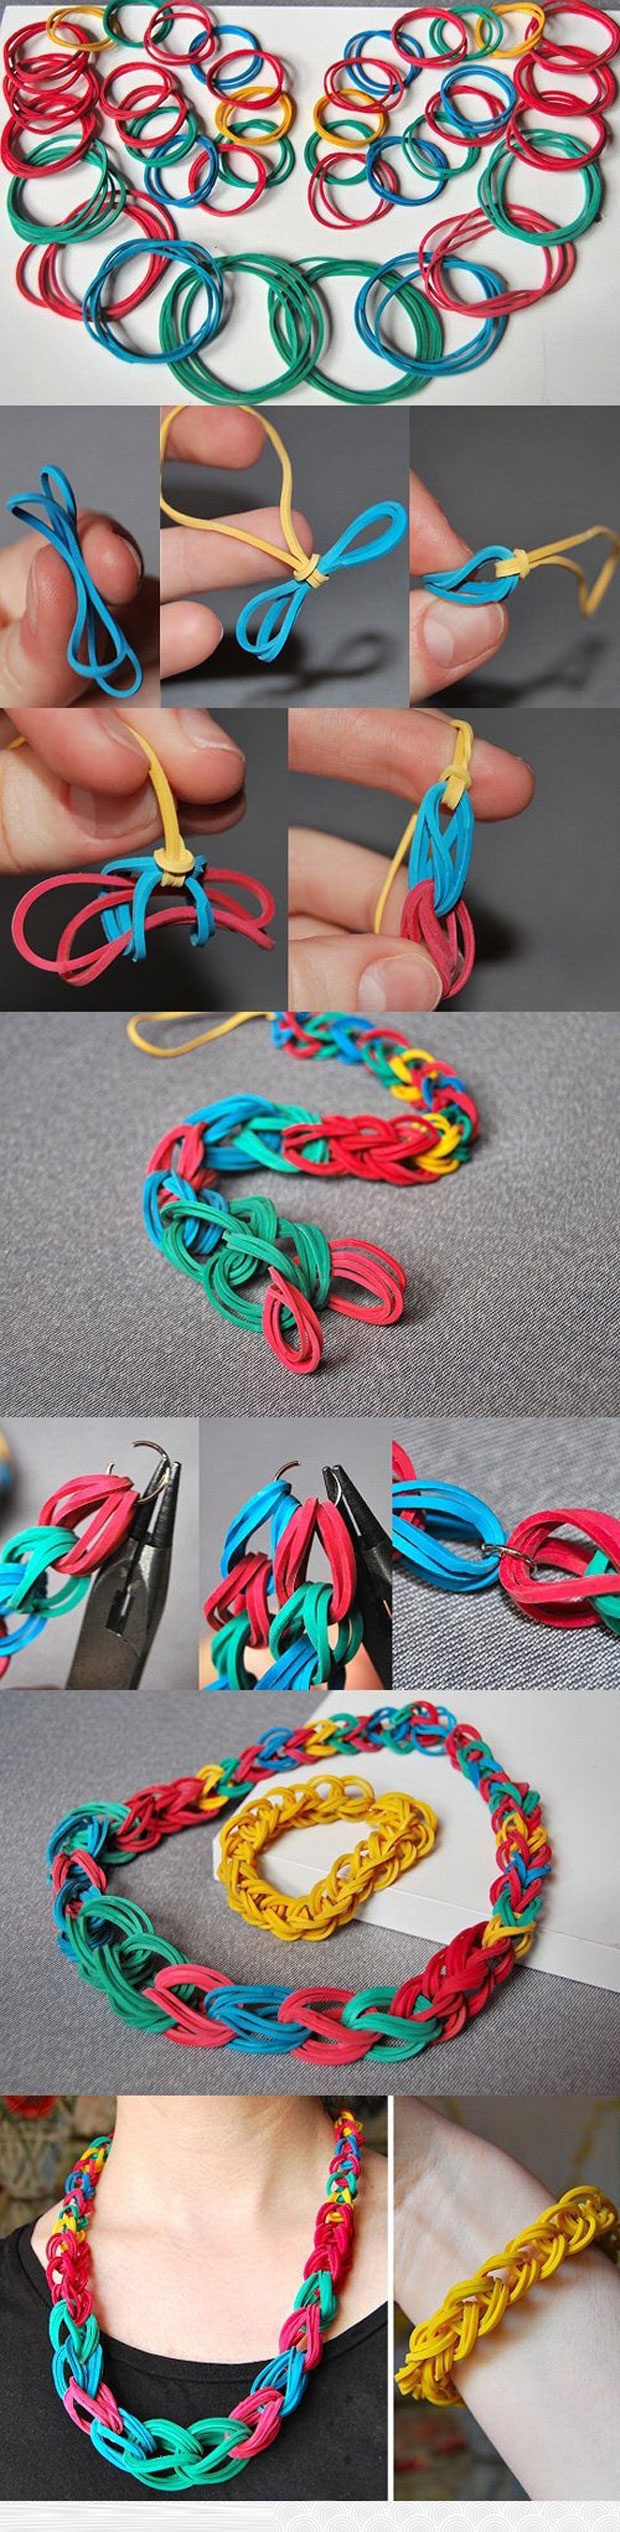 diy-simple-rubber-band-bracelet